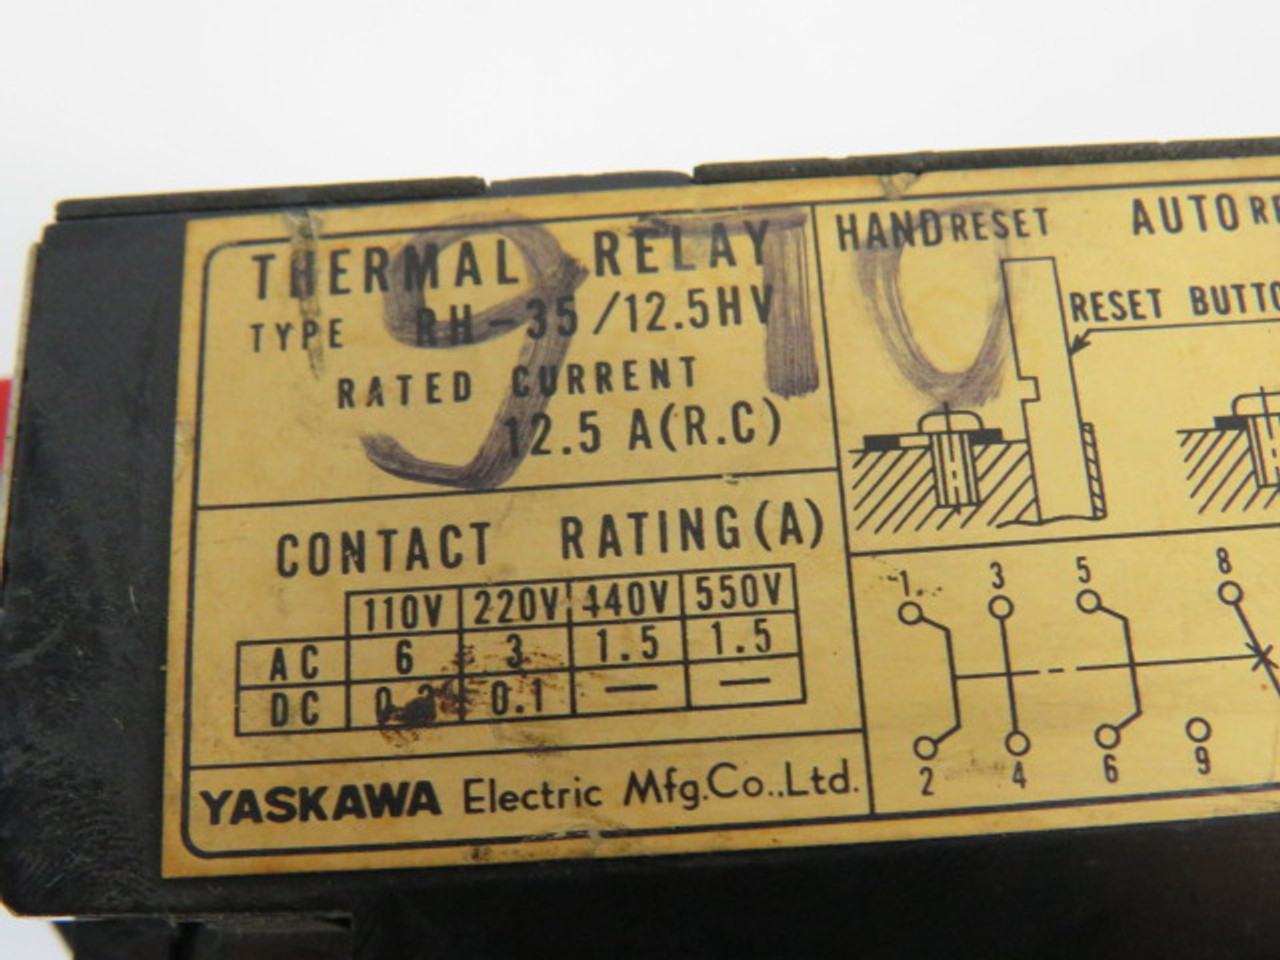 Yaskawa RH-35/12.5HV Thermal Overload Relay 12.5A 550V USED